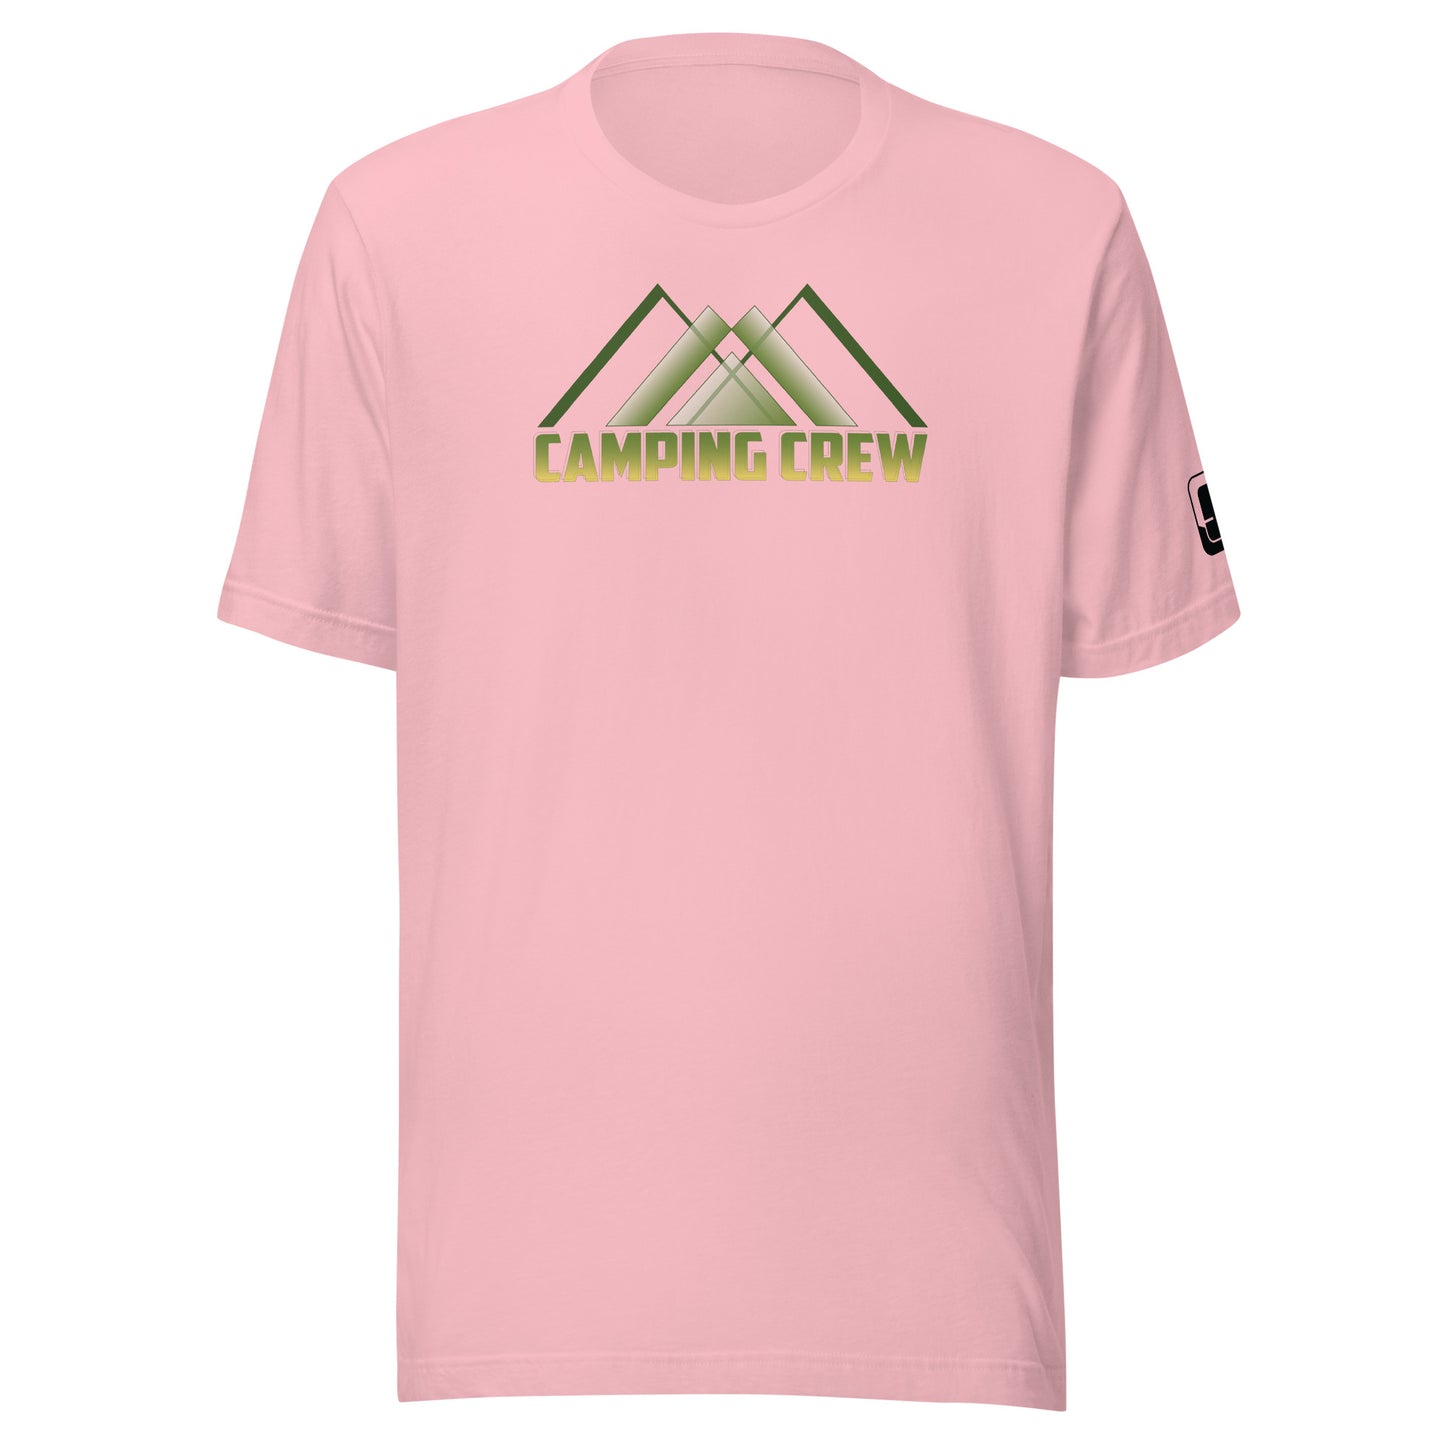 Mountain Comrades: The Camping Crew Expedition Shirt